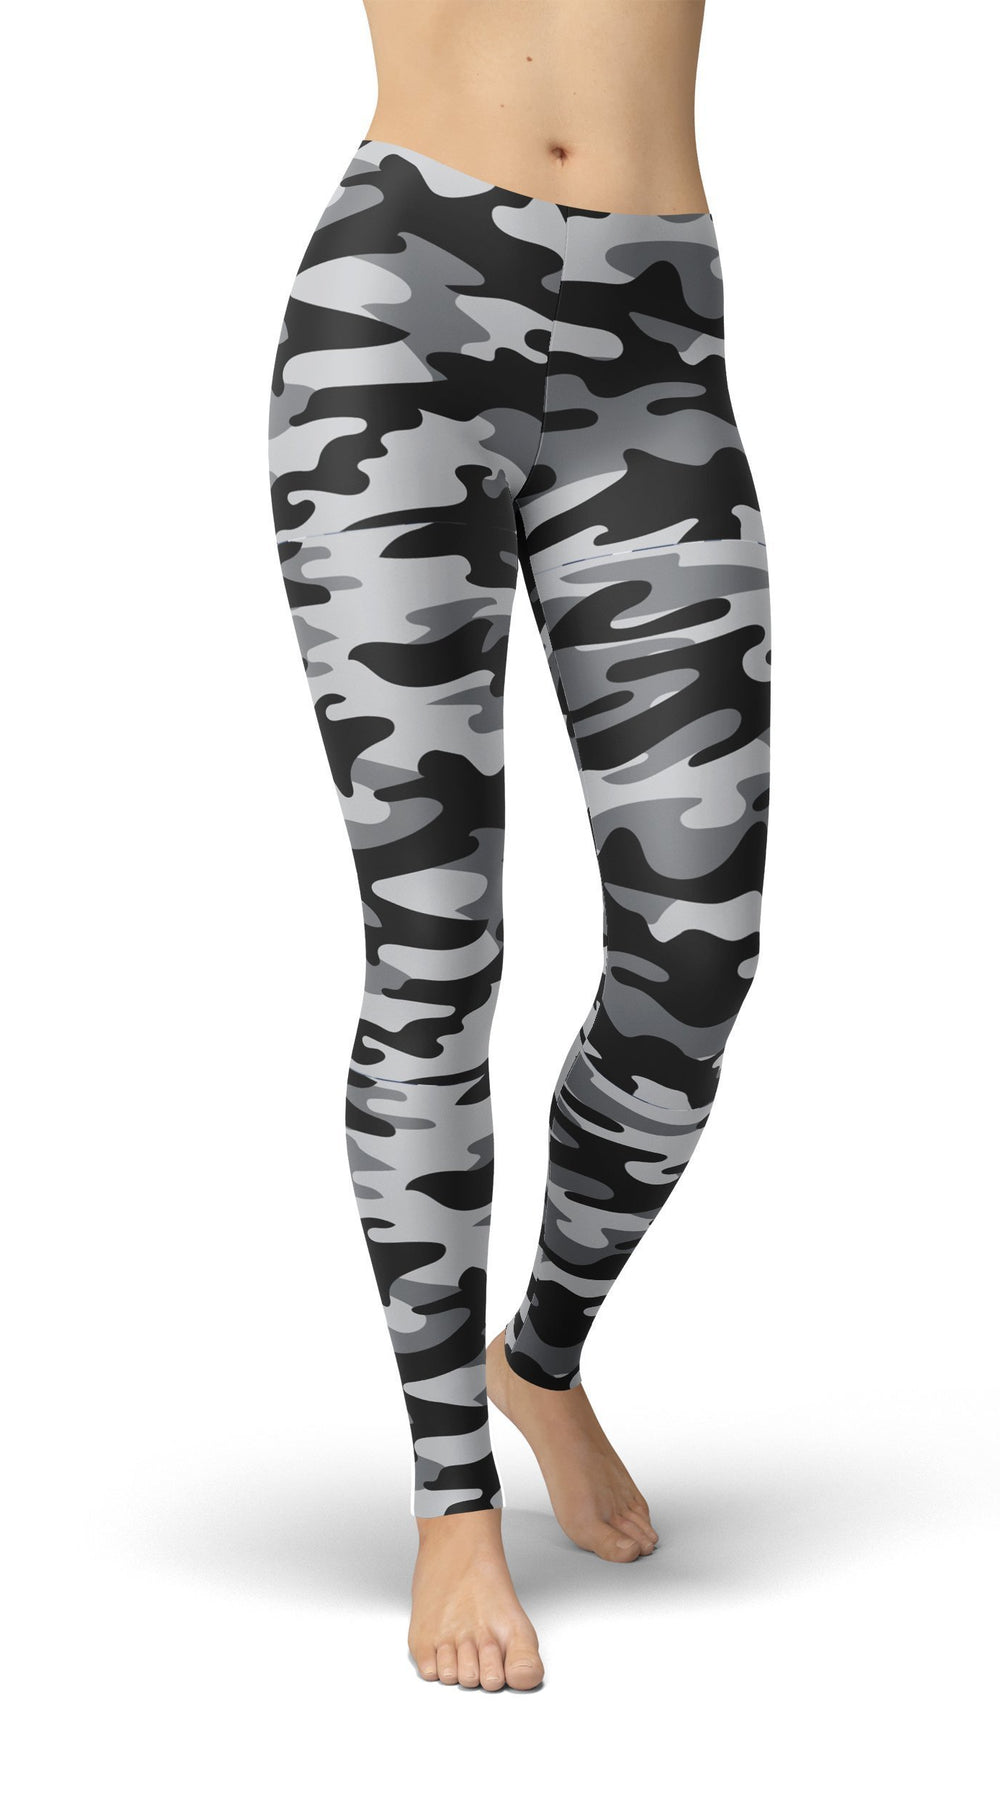 jean dark grey camouflage leggings